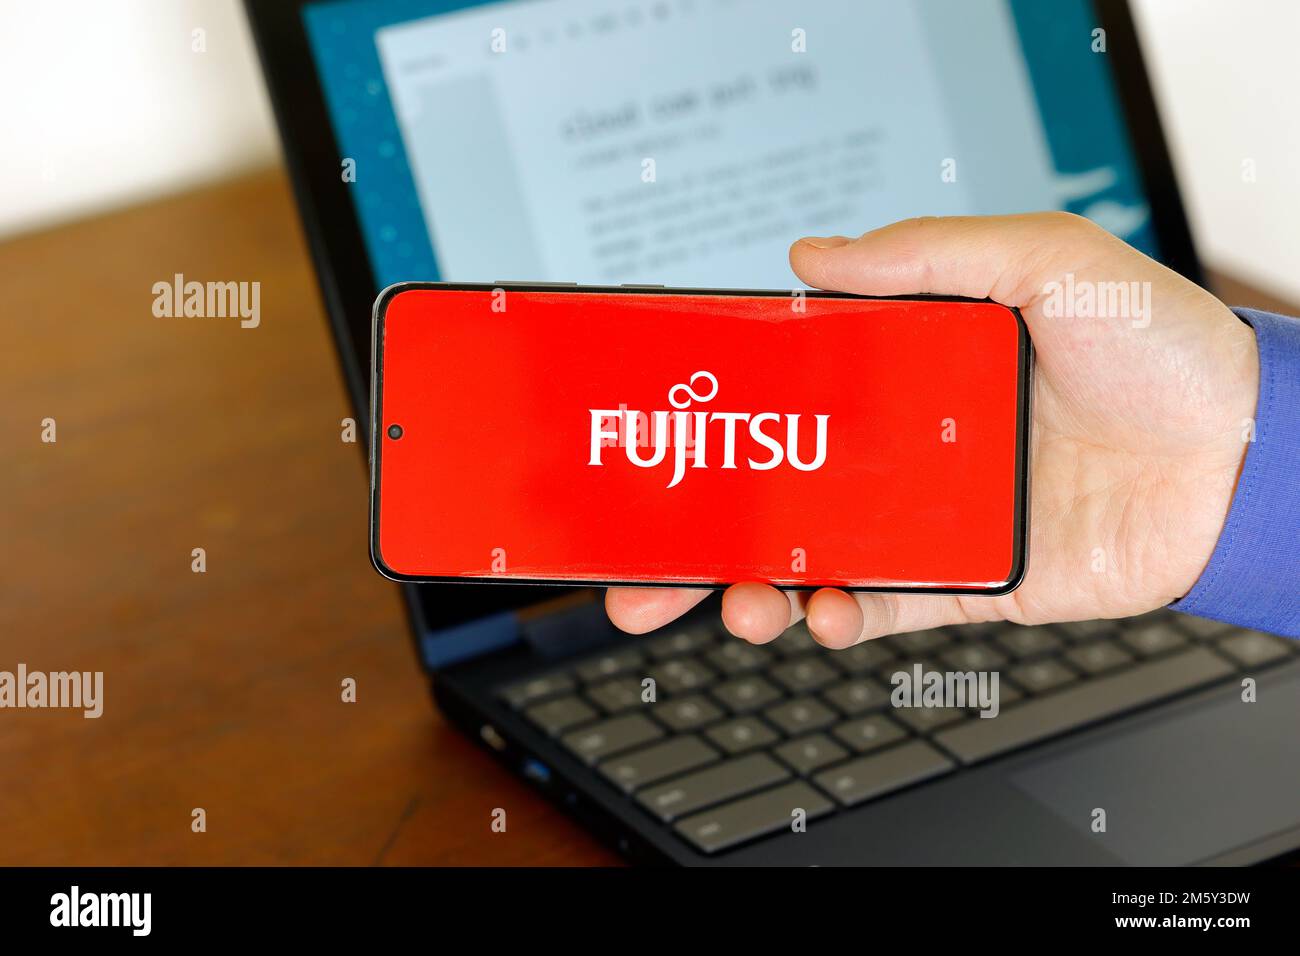 Logo de Fujitsu Cloud sur un smartphone devant un ordinateur. Fujitsu Cloud est le service d'technologie du cloud computing de Fujitsu. Banque D'Images